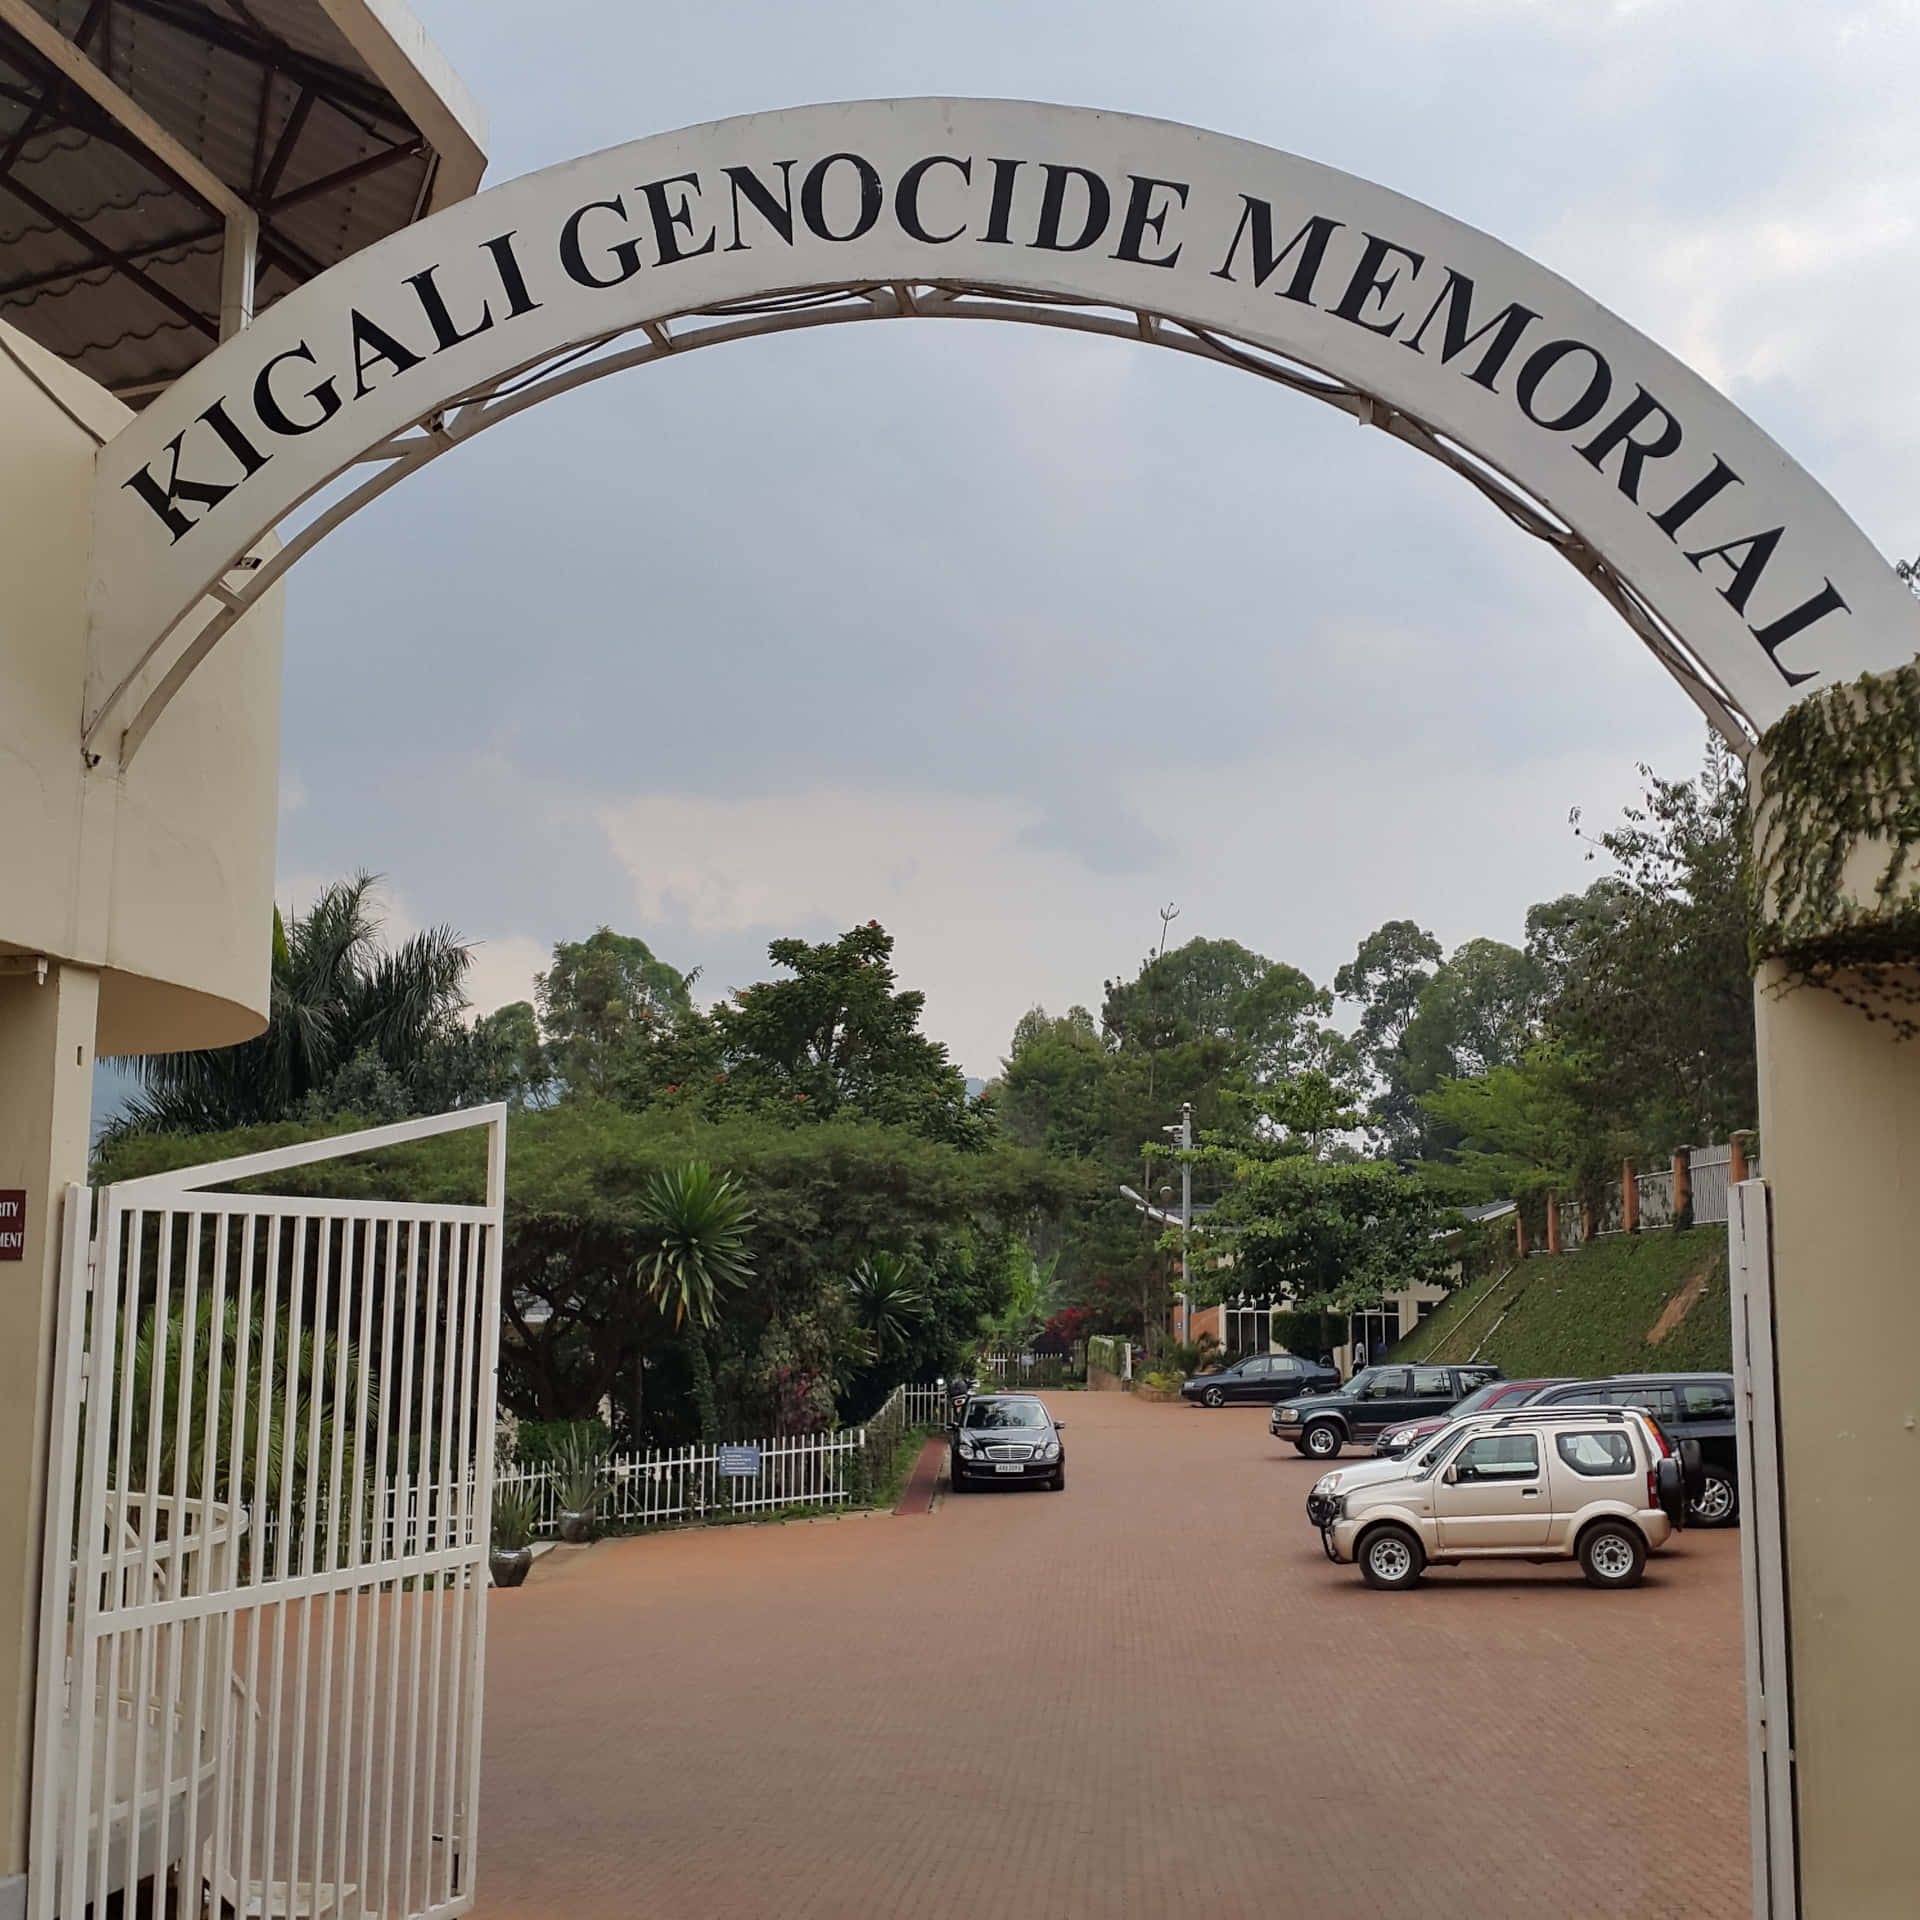 Kigali Genocide Memorial Arch Wallpaper